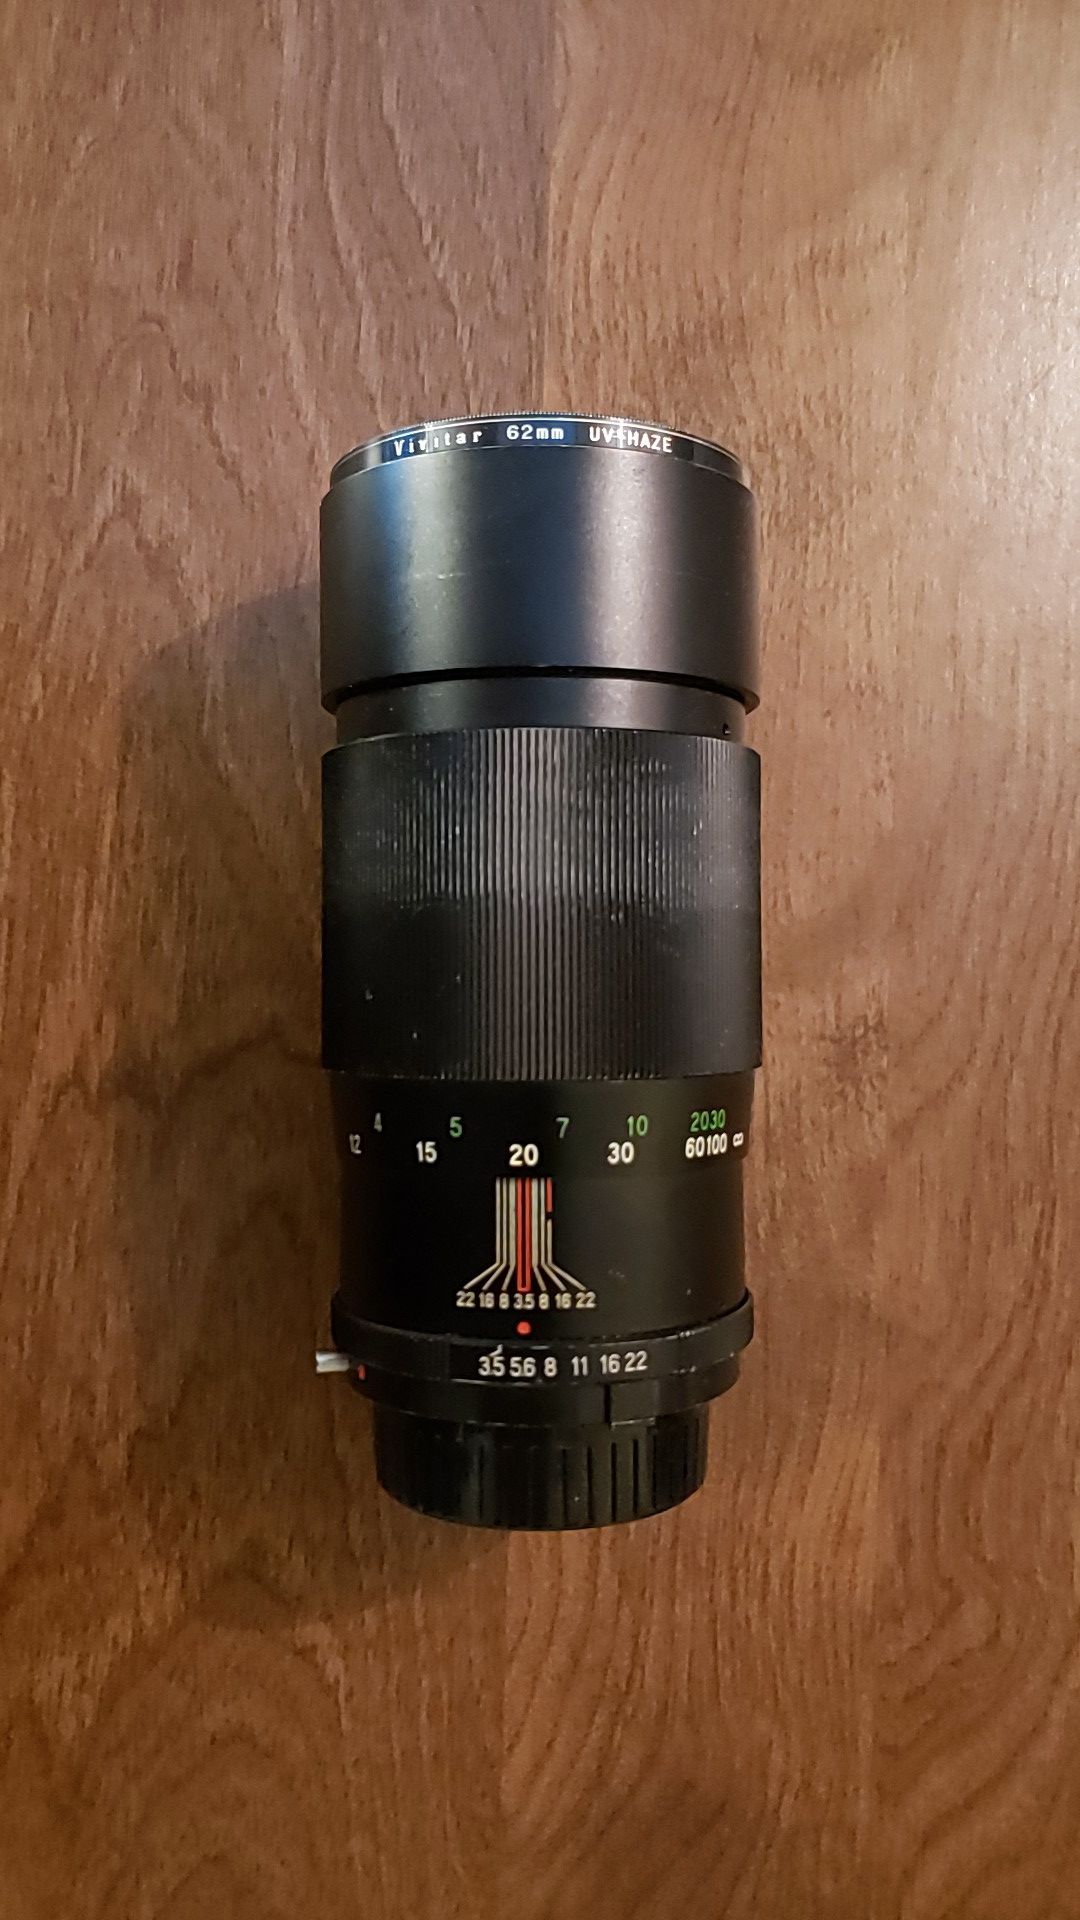 Vivitar Auto 200mm 1:3.5 Telephoto lens